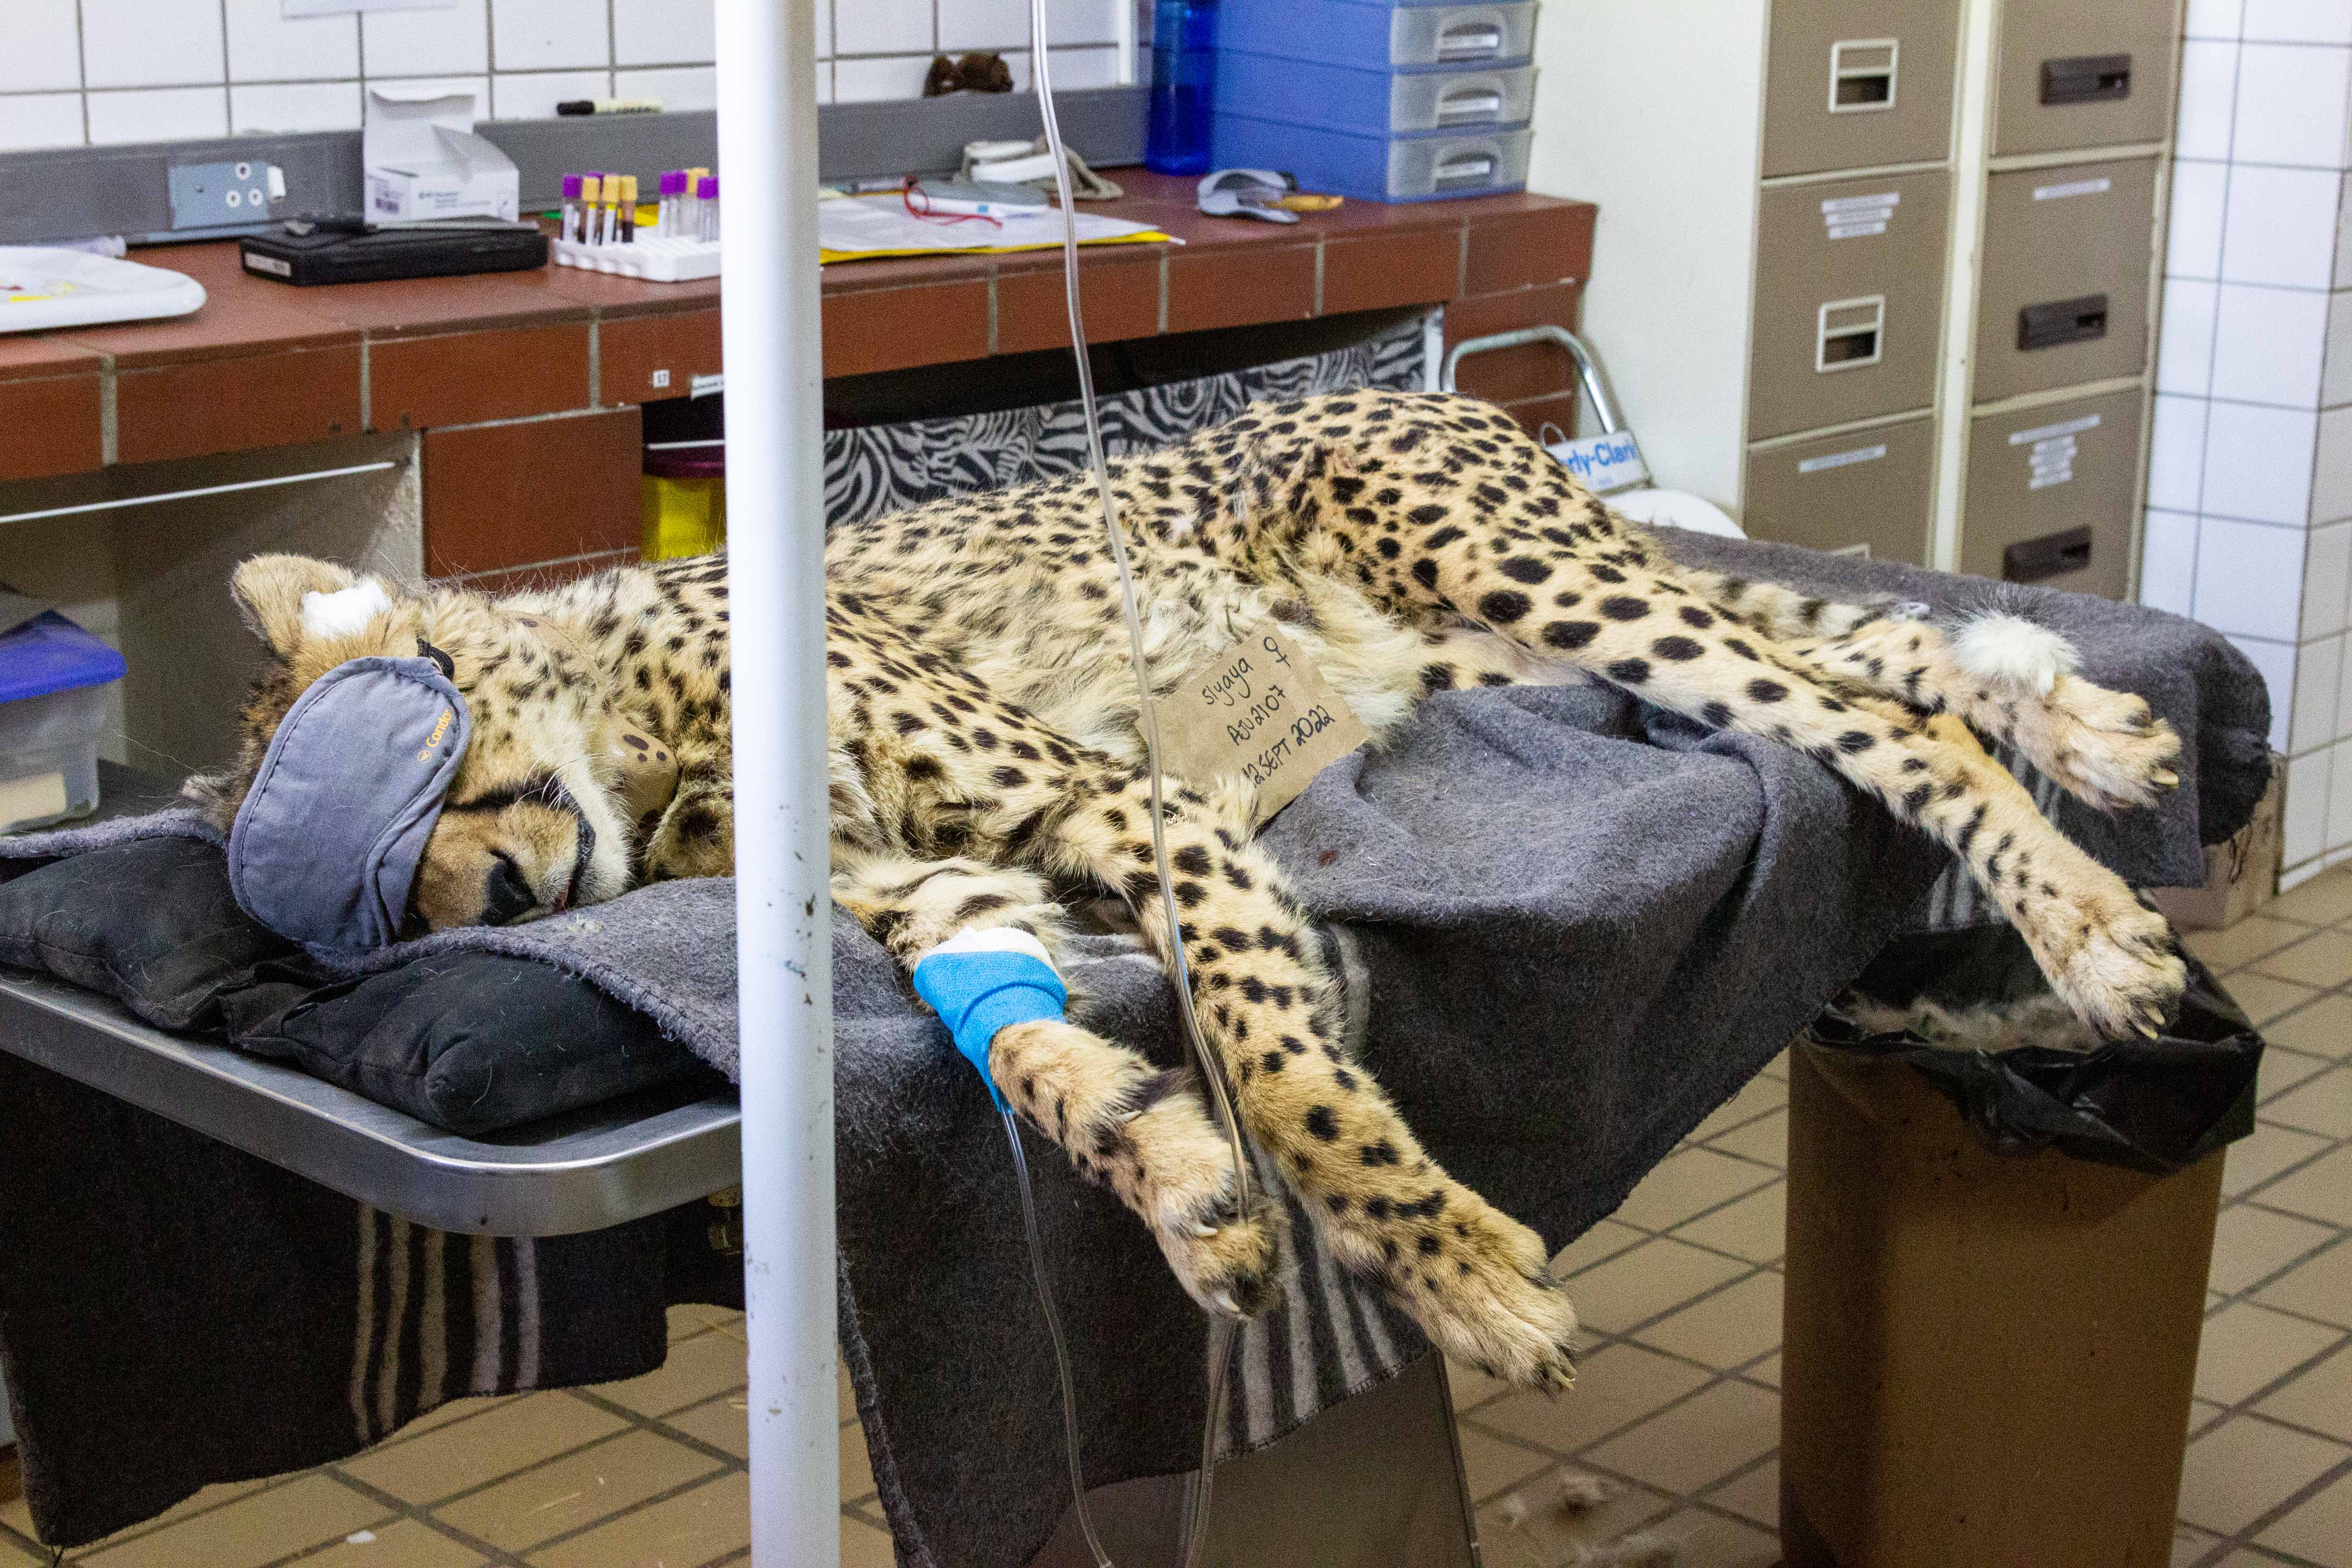 cheetah sleeping in an unconscious state